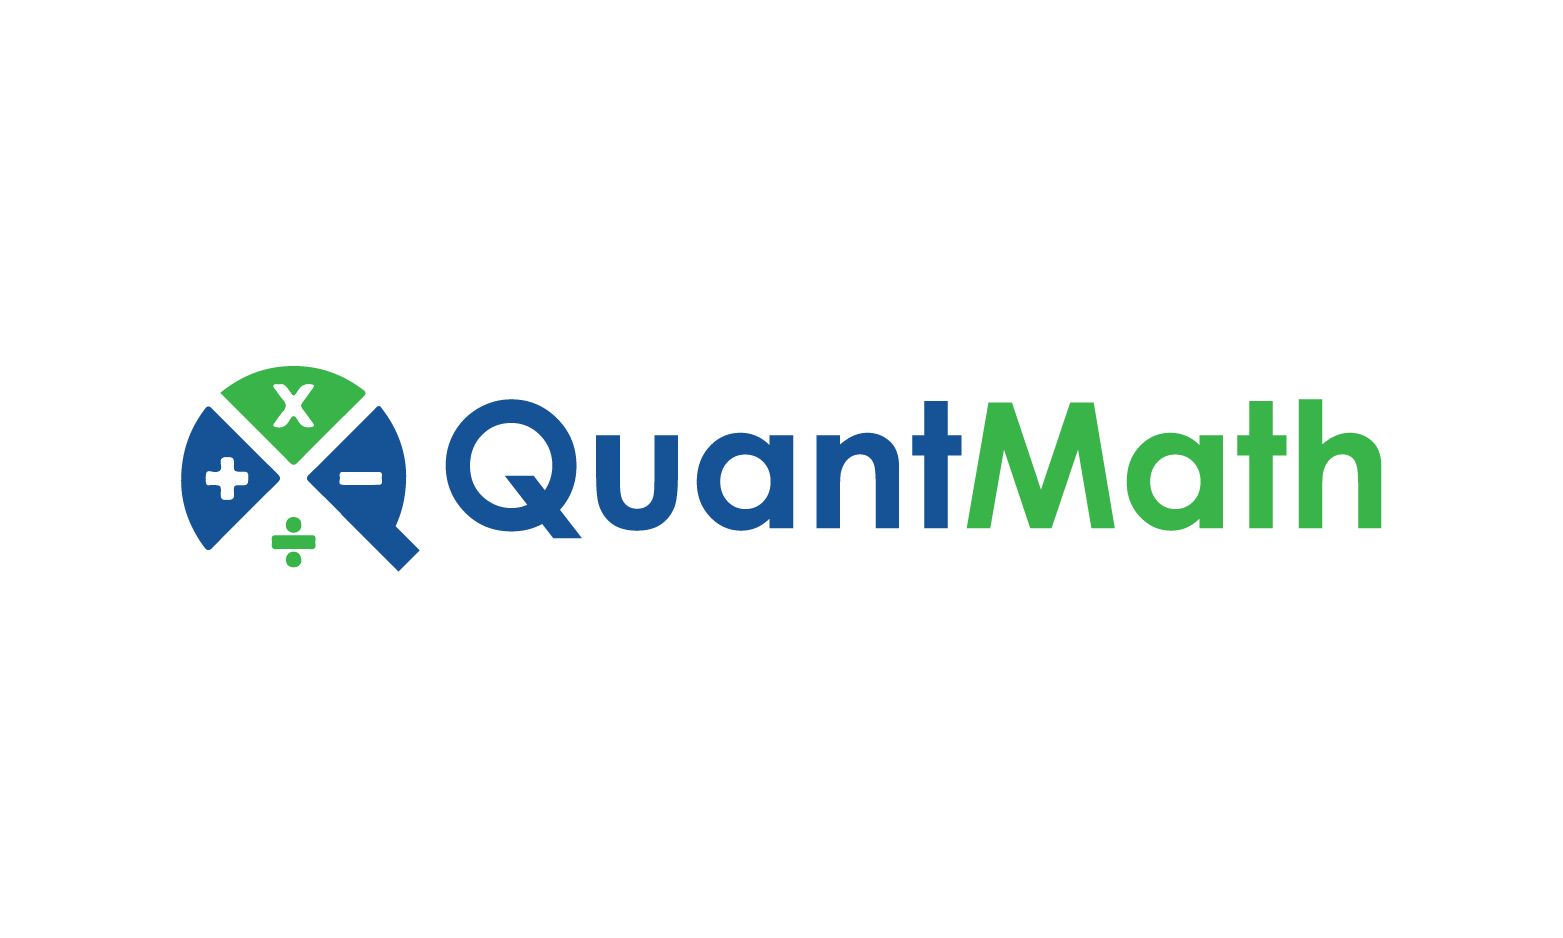 QuantMath.com - Creative brandable domain for sale